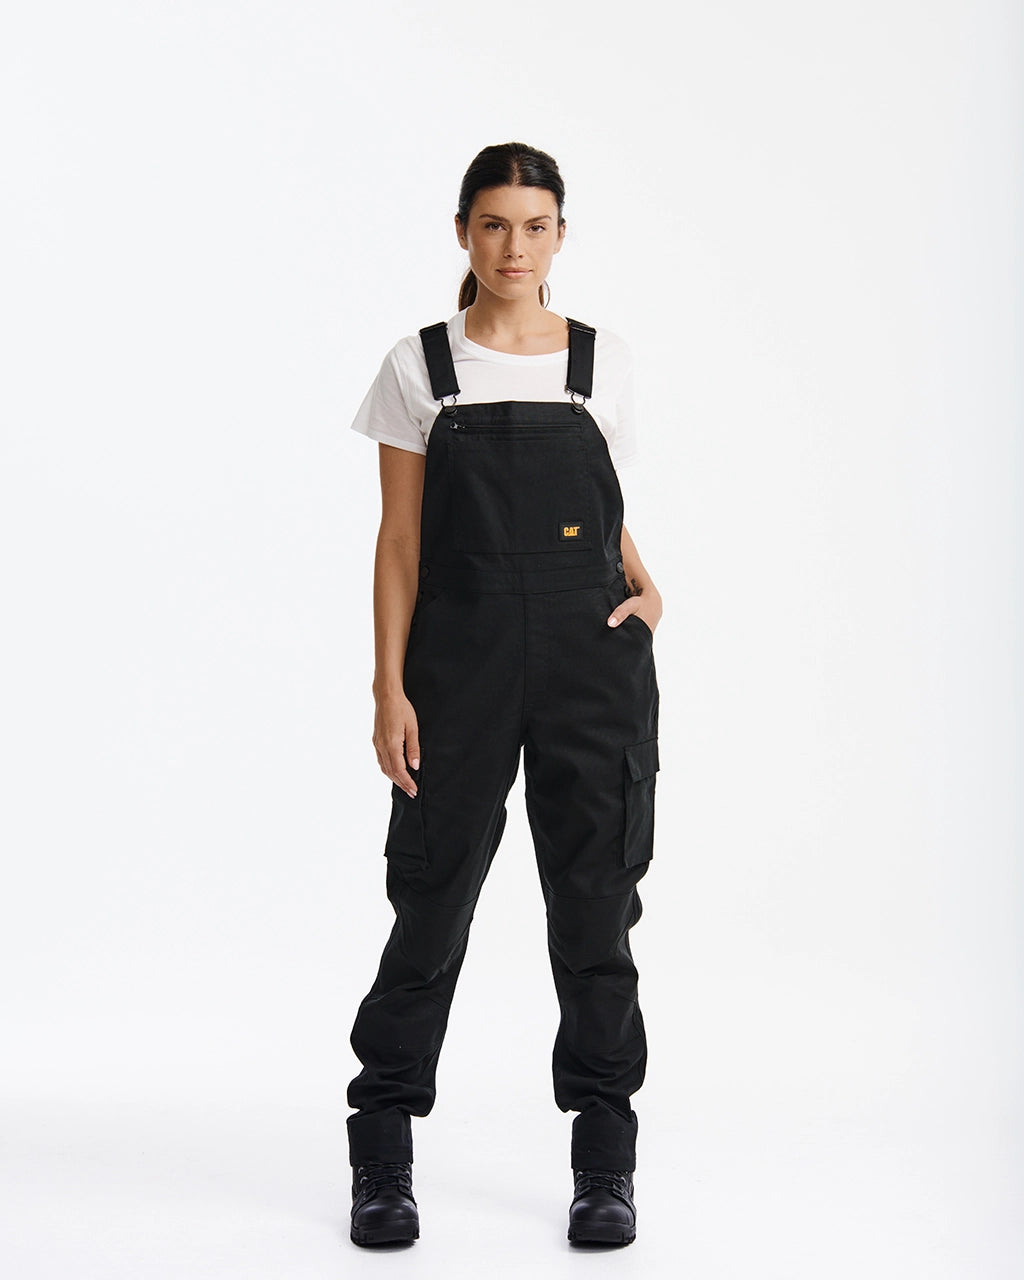 Caterpillar Workwear Official Website - Work Clothes & Apparel from Cat®